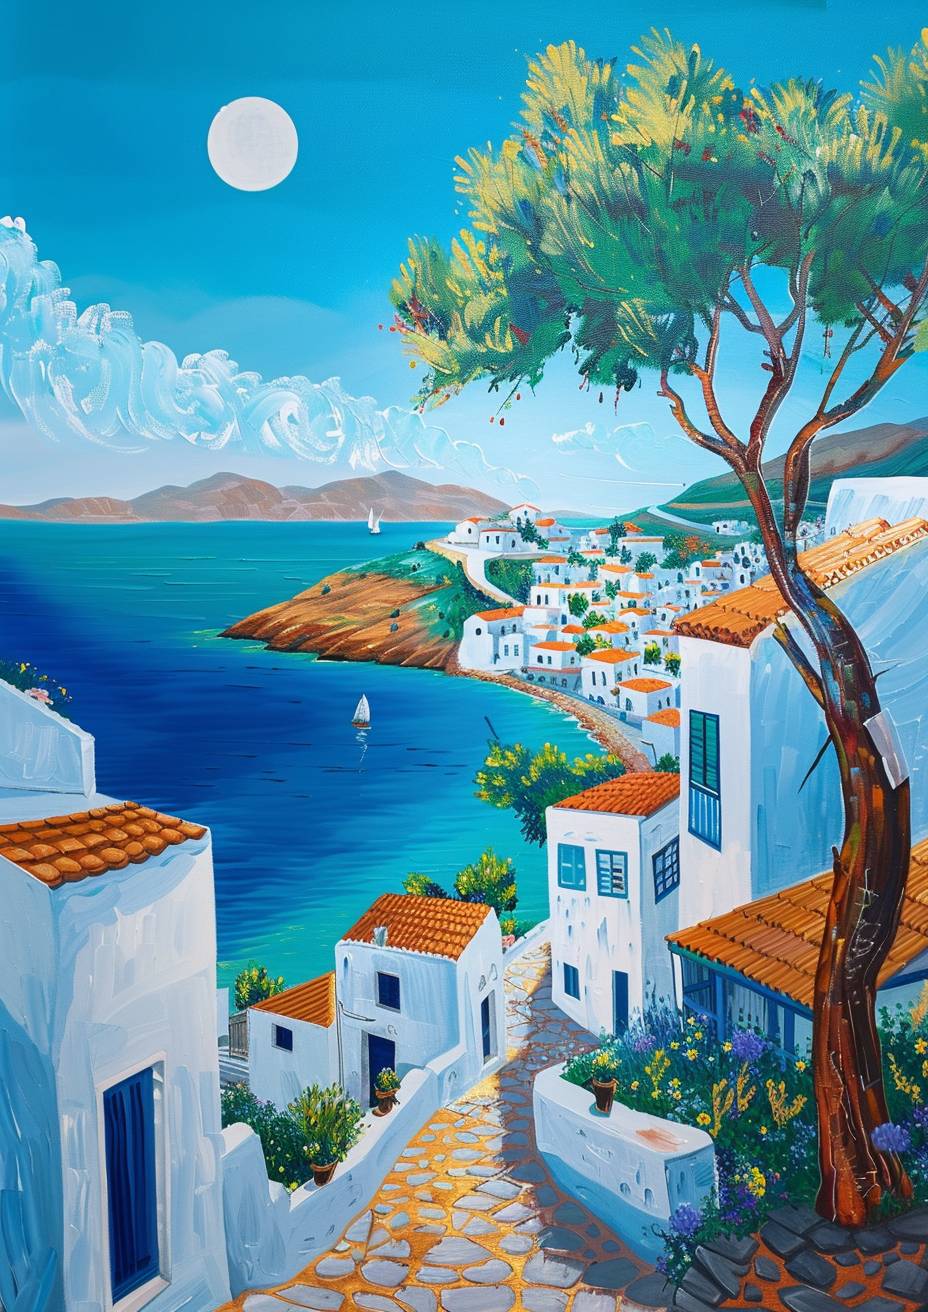 necardエーゲ海の夏のギリシャの芸術的な絵画ボヘミアンモダンなミニマルな素朴なスタイル多くの余白